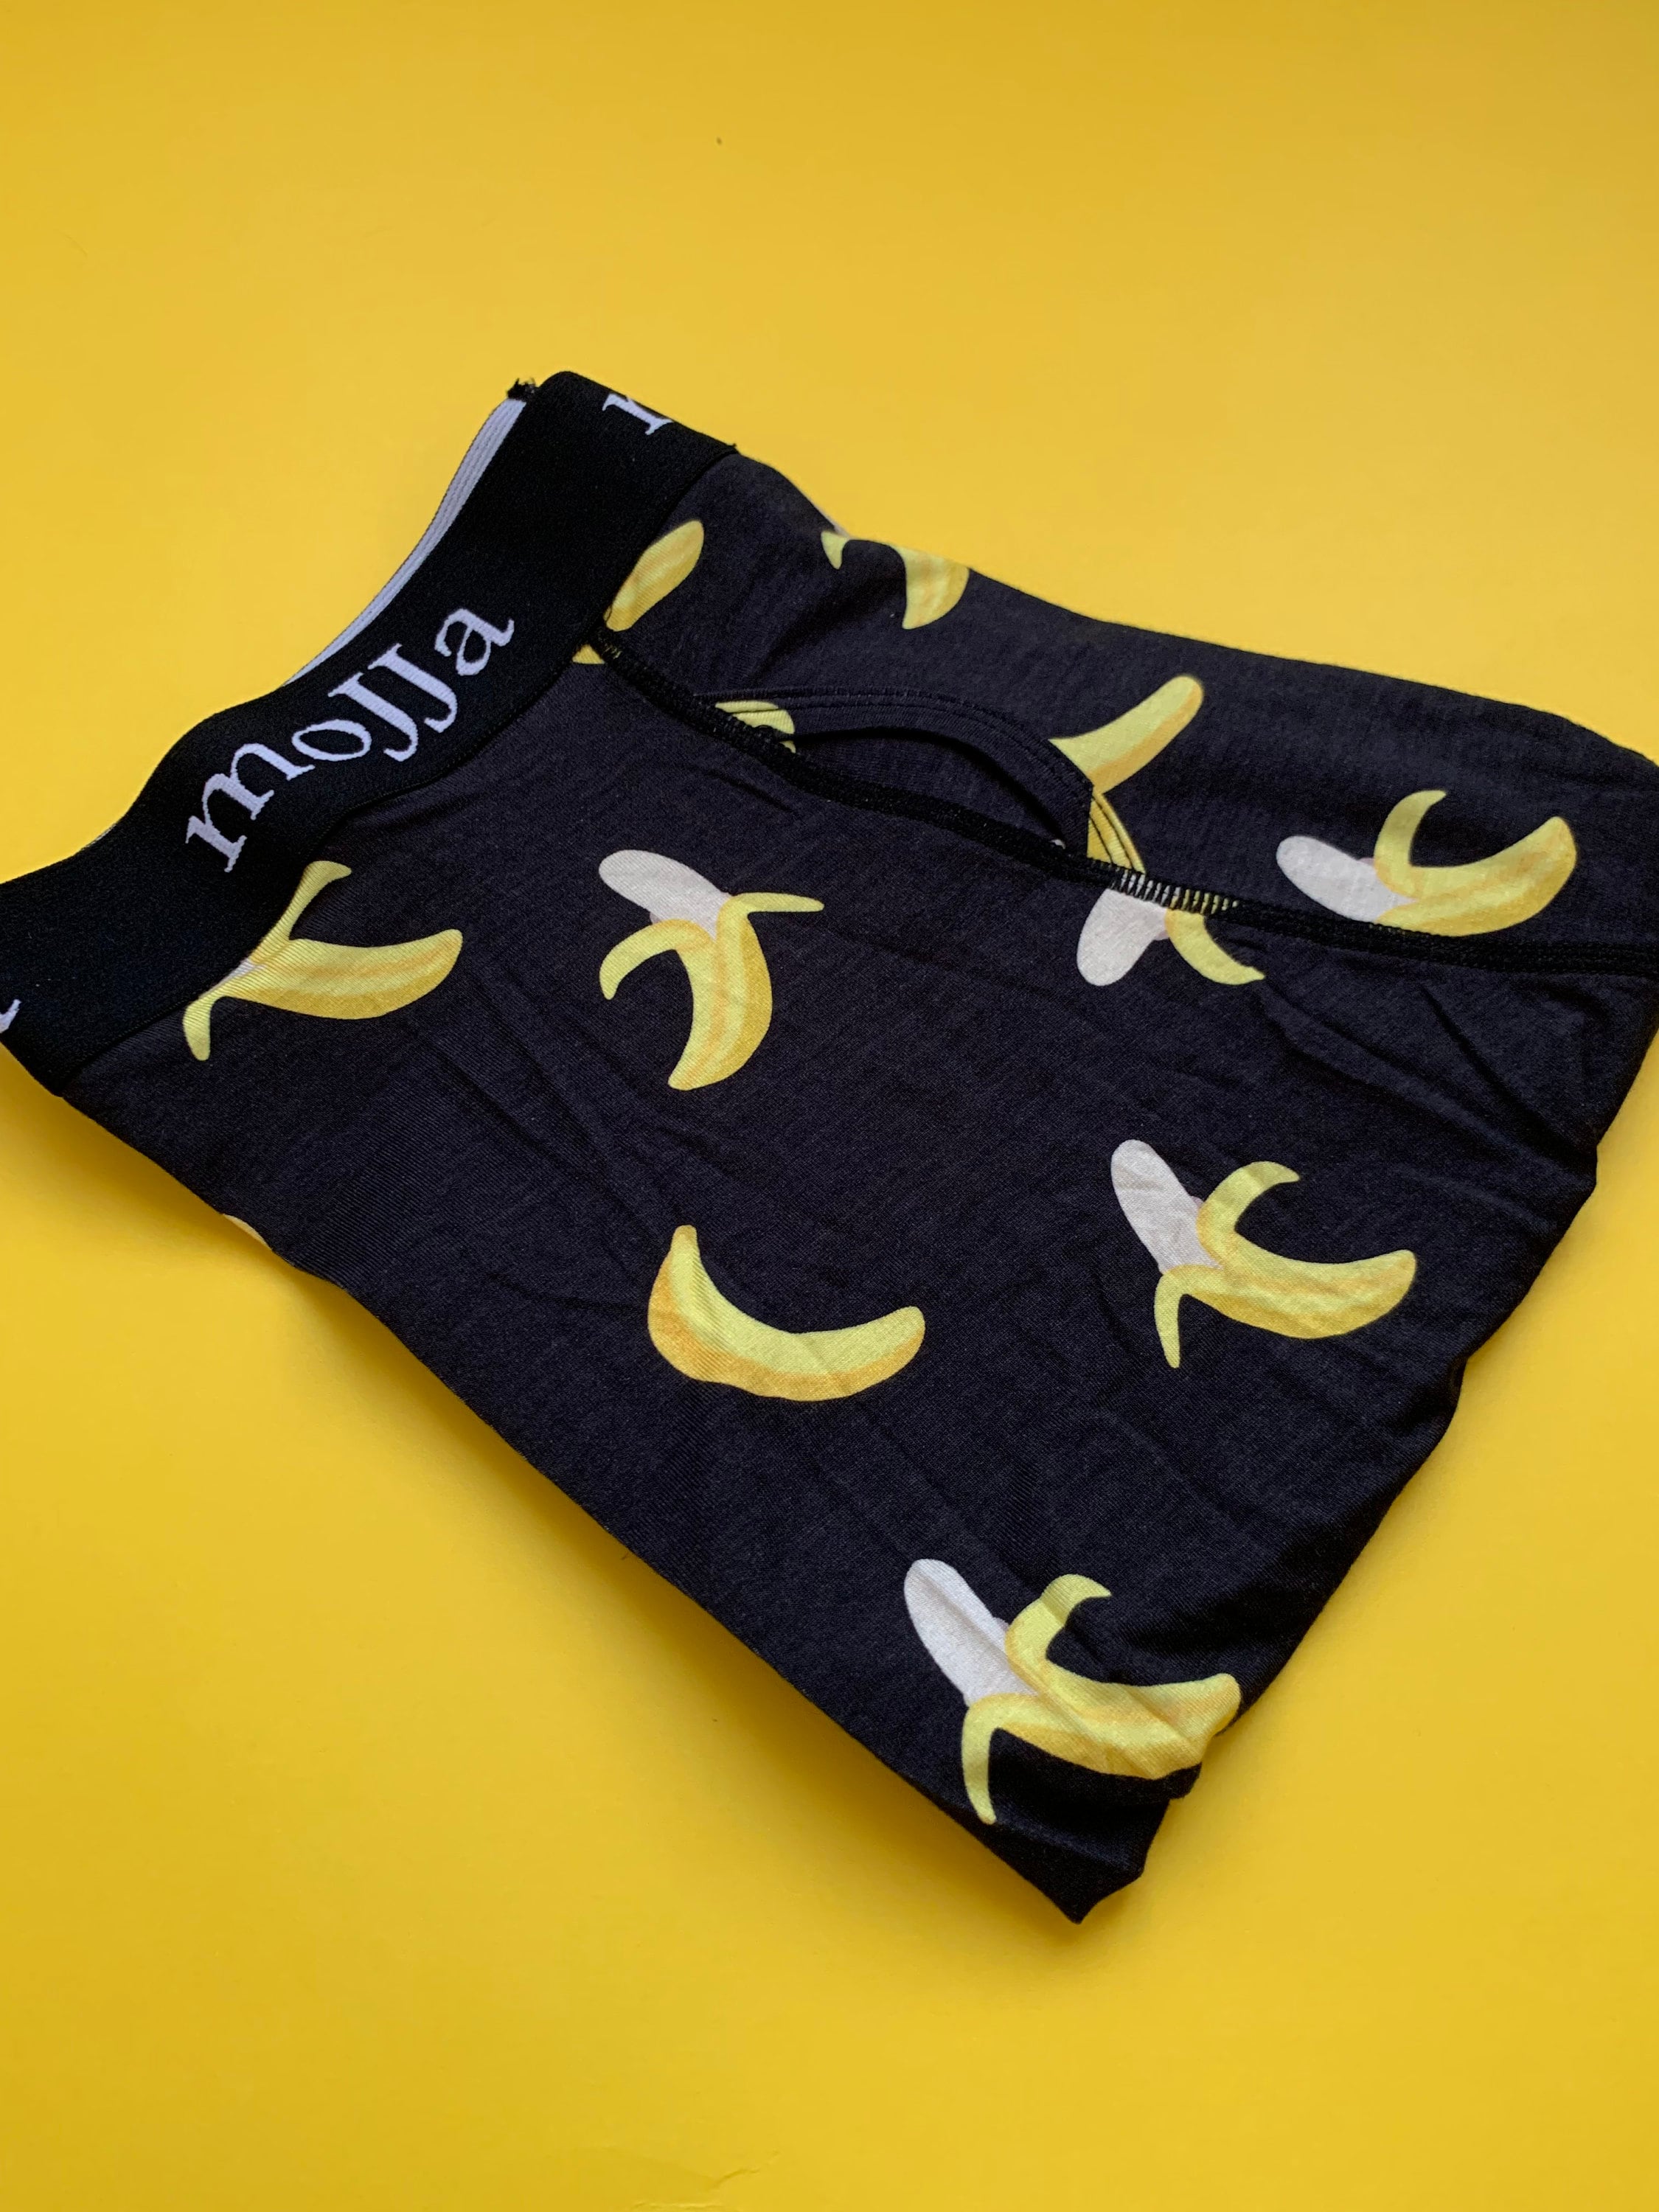 Men's Bananas Boxer Briefs Modal Underwear Fun Gitch Groom Gifts Sweat  Proof Comfortable Undies Funky Gifts for Men 